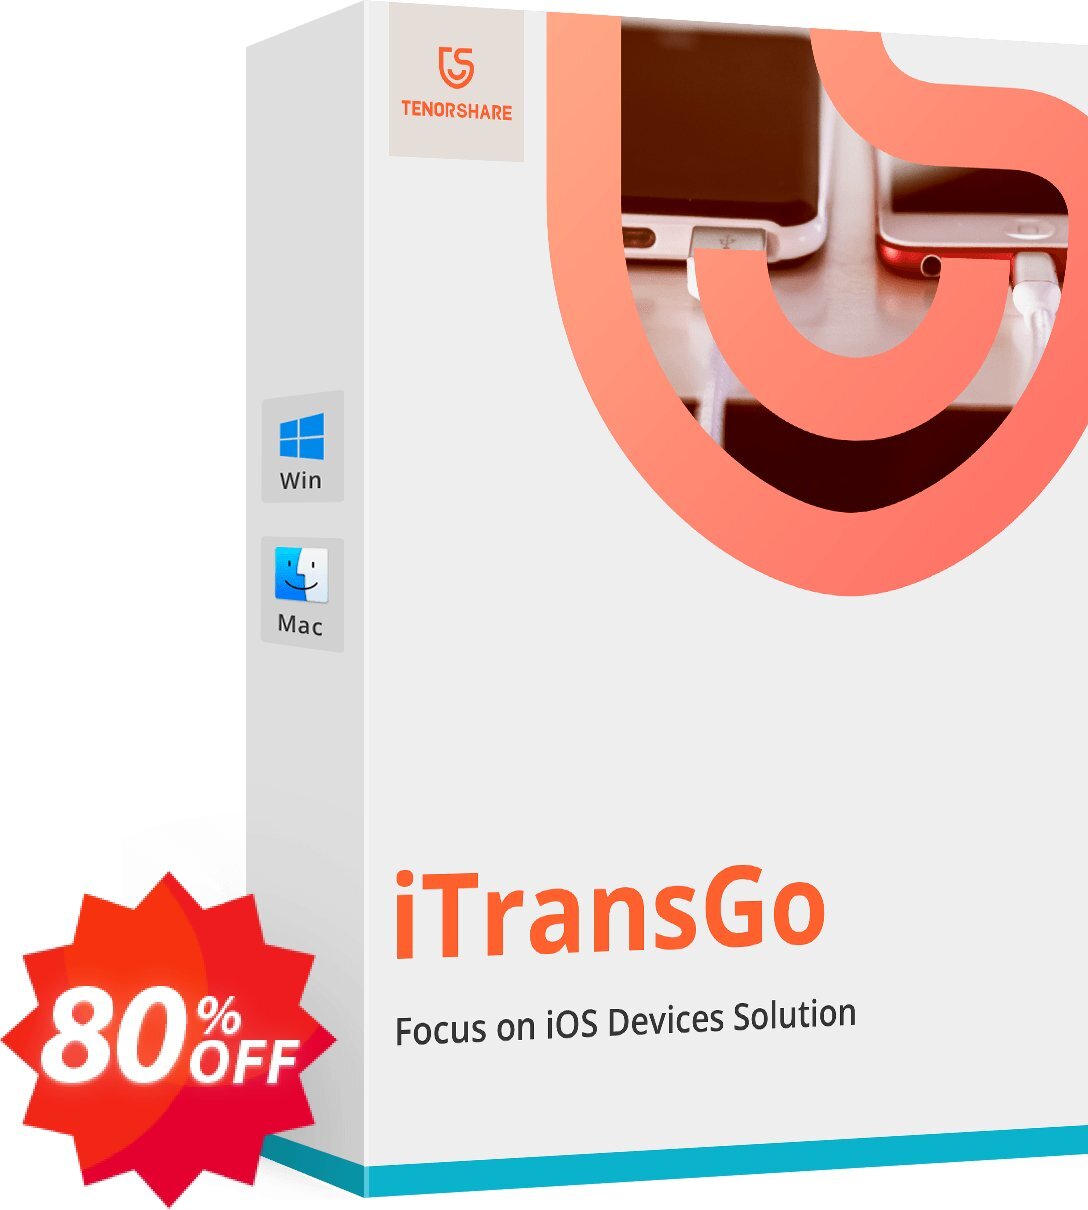 Tenorshare iTransGo, Lifetime Plan  Coupon code 80% discount 